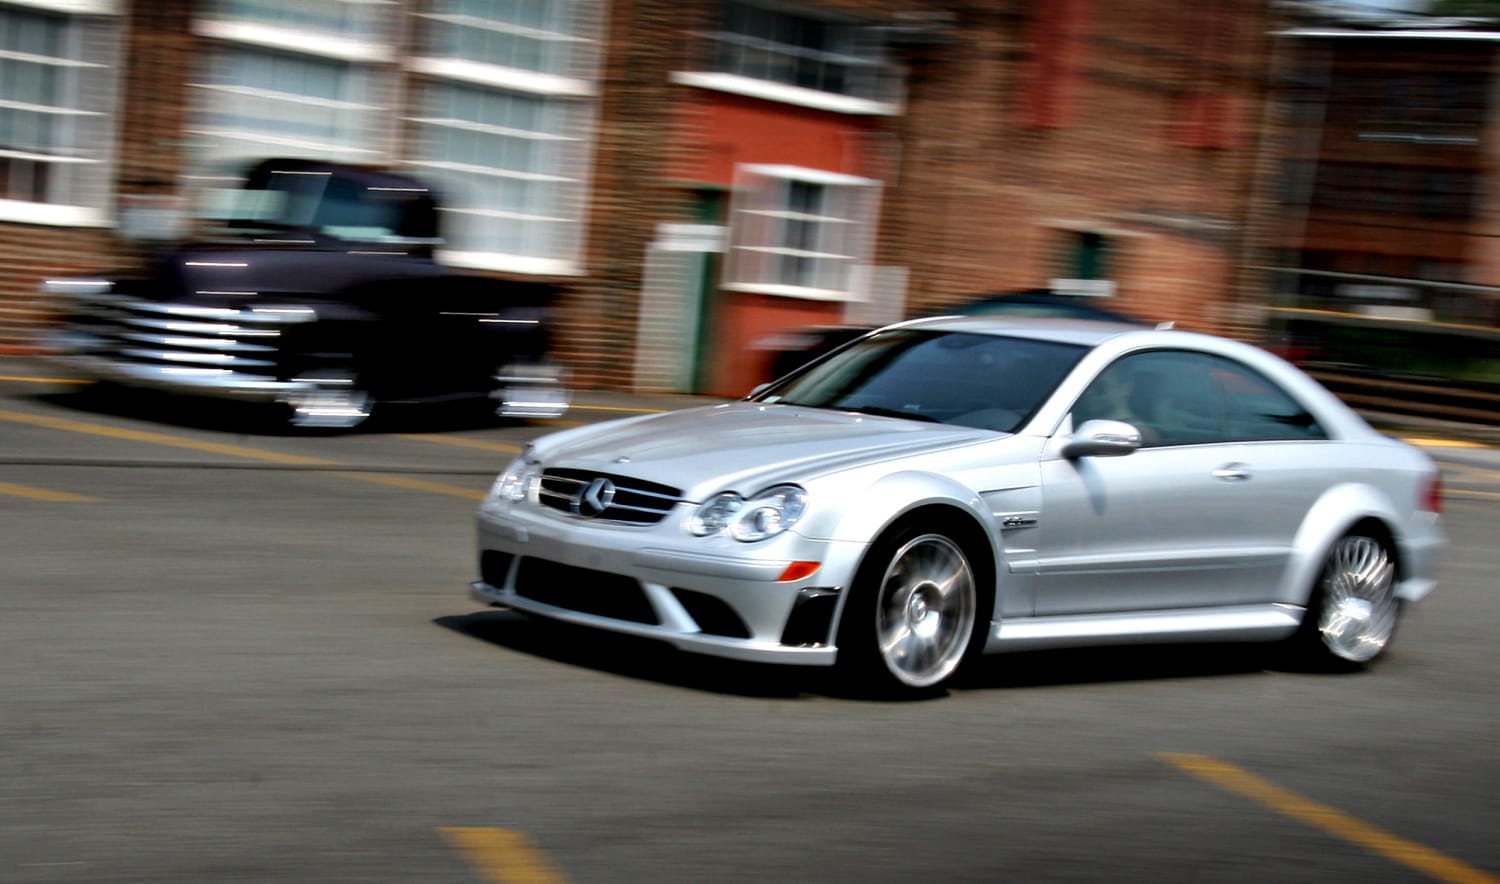 Daimler recalls 744,000 Mercedes-Benz vehicles on fears the